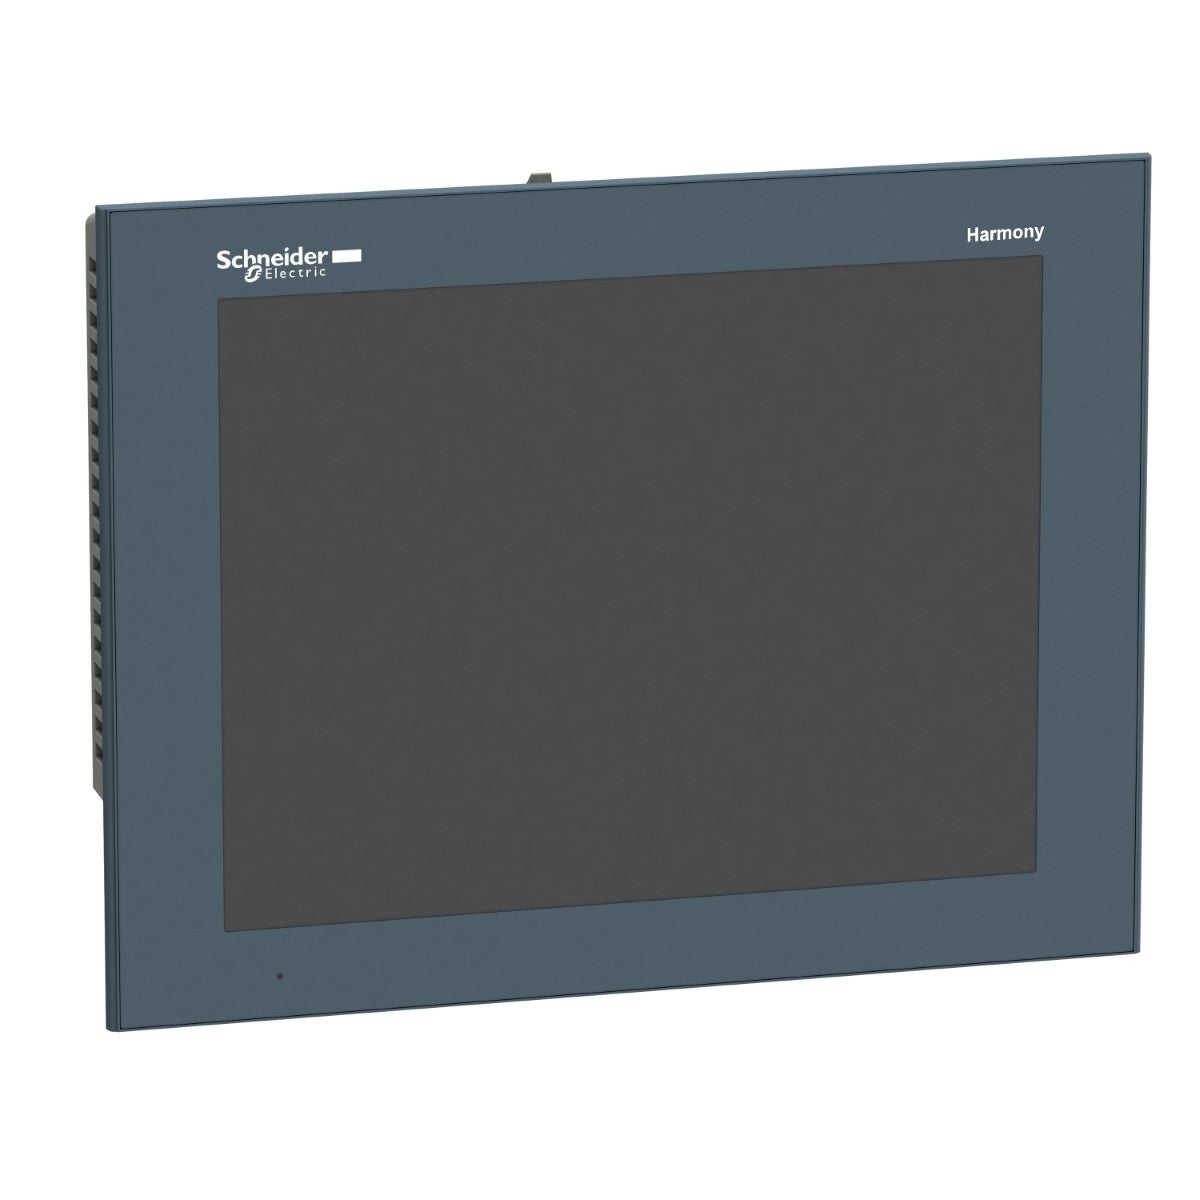 advanced touchscreen panel, Harmony GTO,800 x 600pixels SVGA, 12.1inch TFT, 96MB